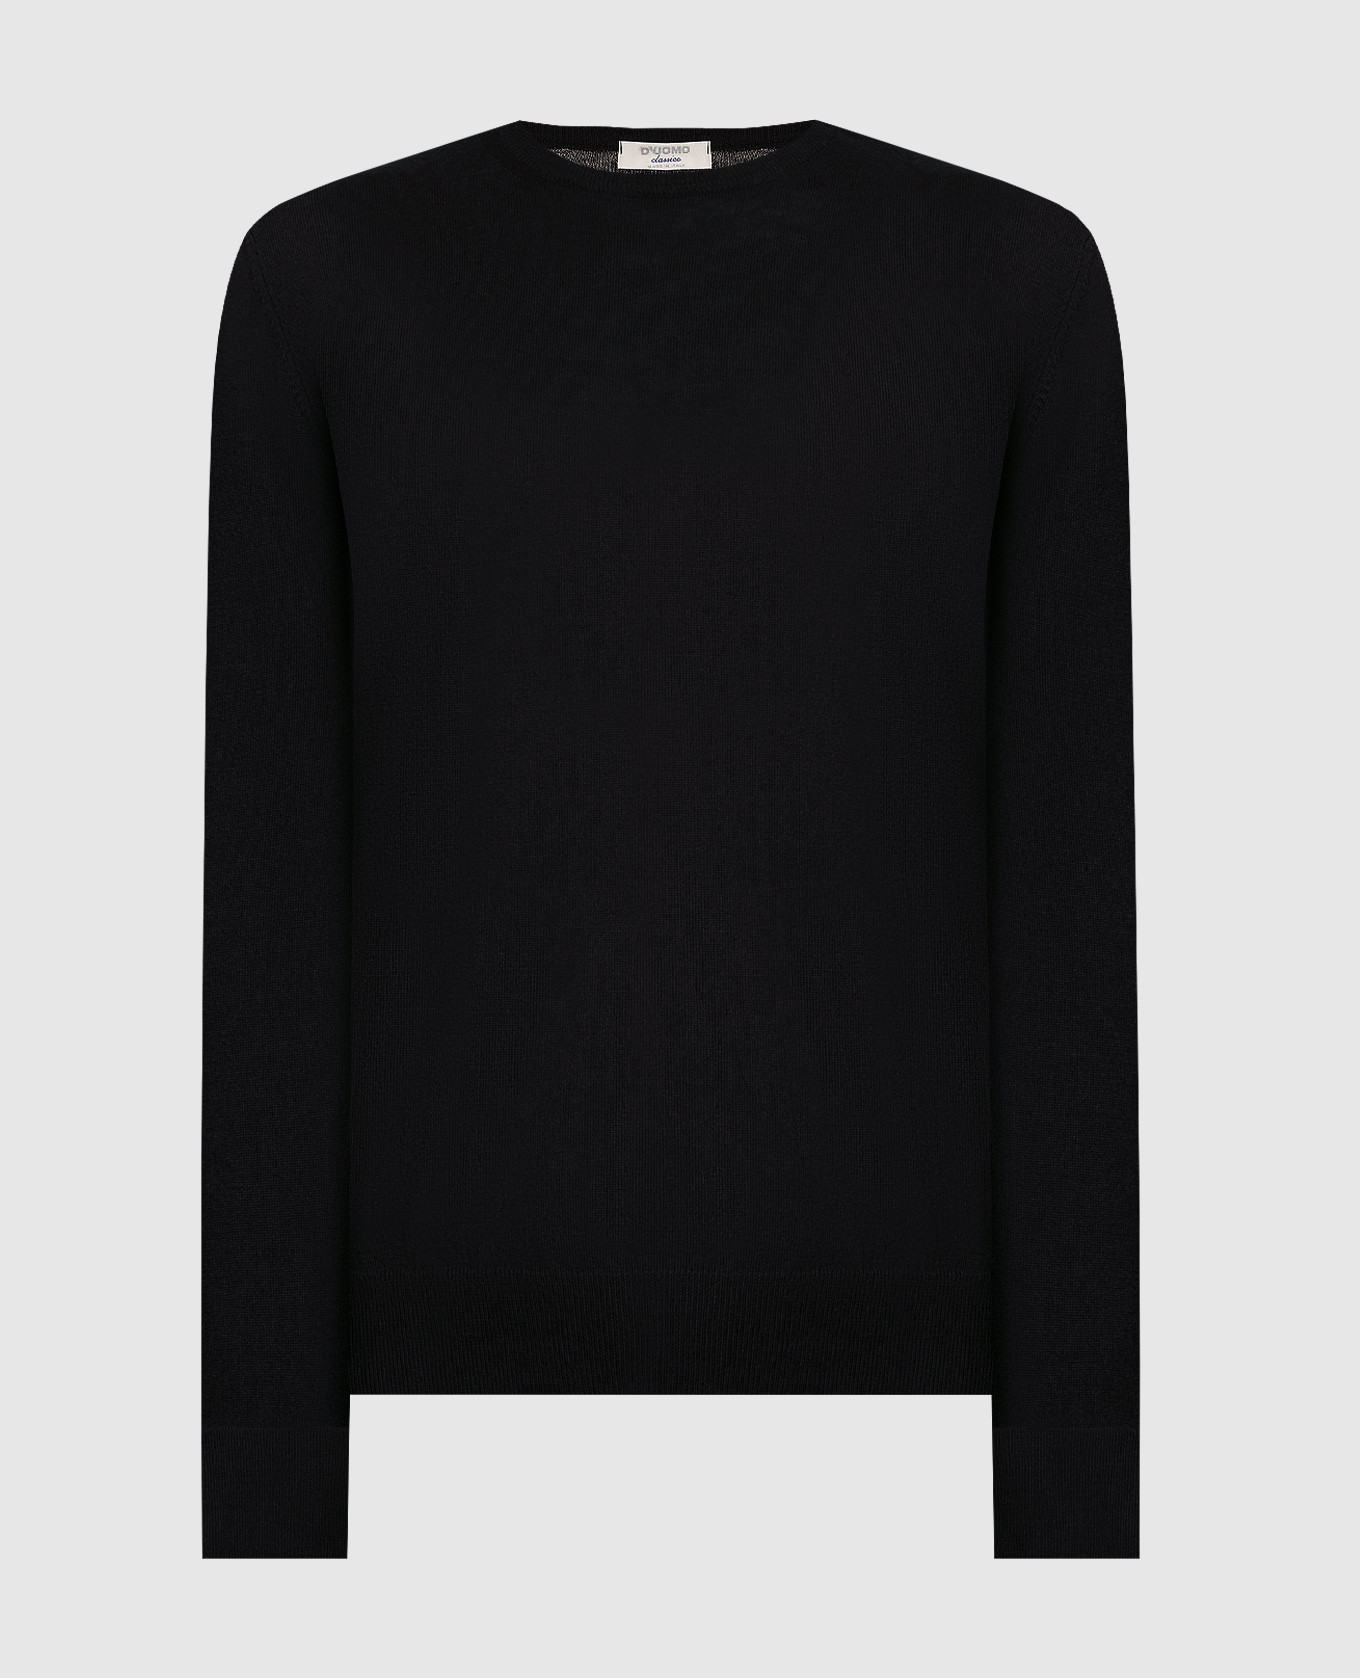 Black merino wool jumper